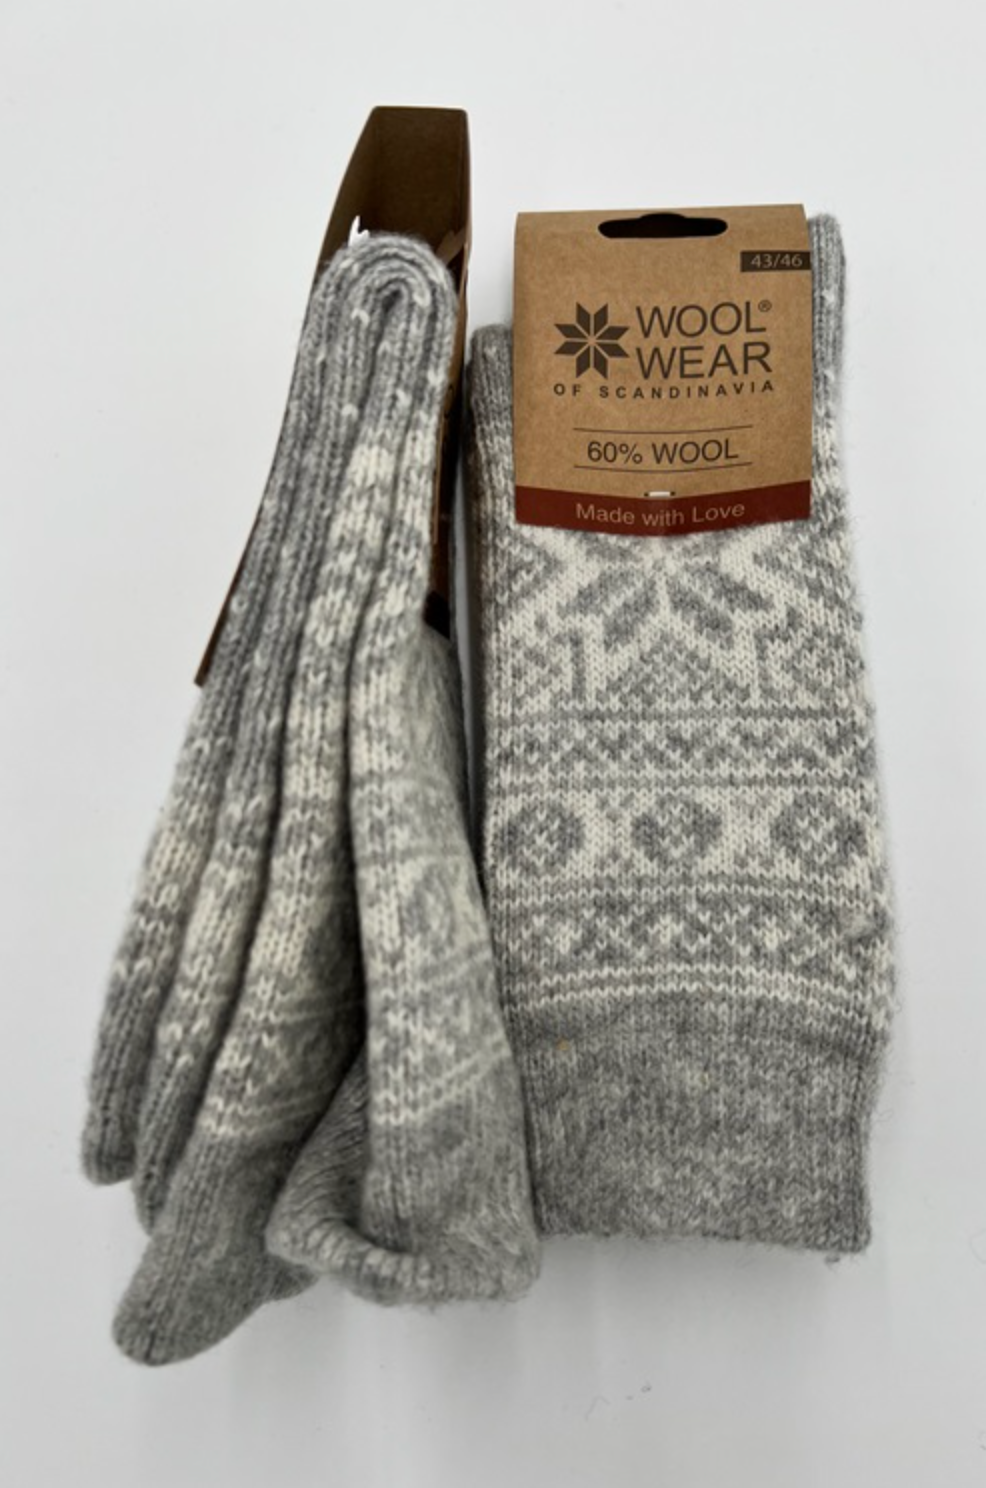 Wool socks with snowflake pattern - light grey/white.